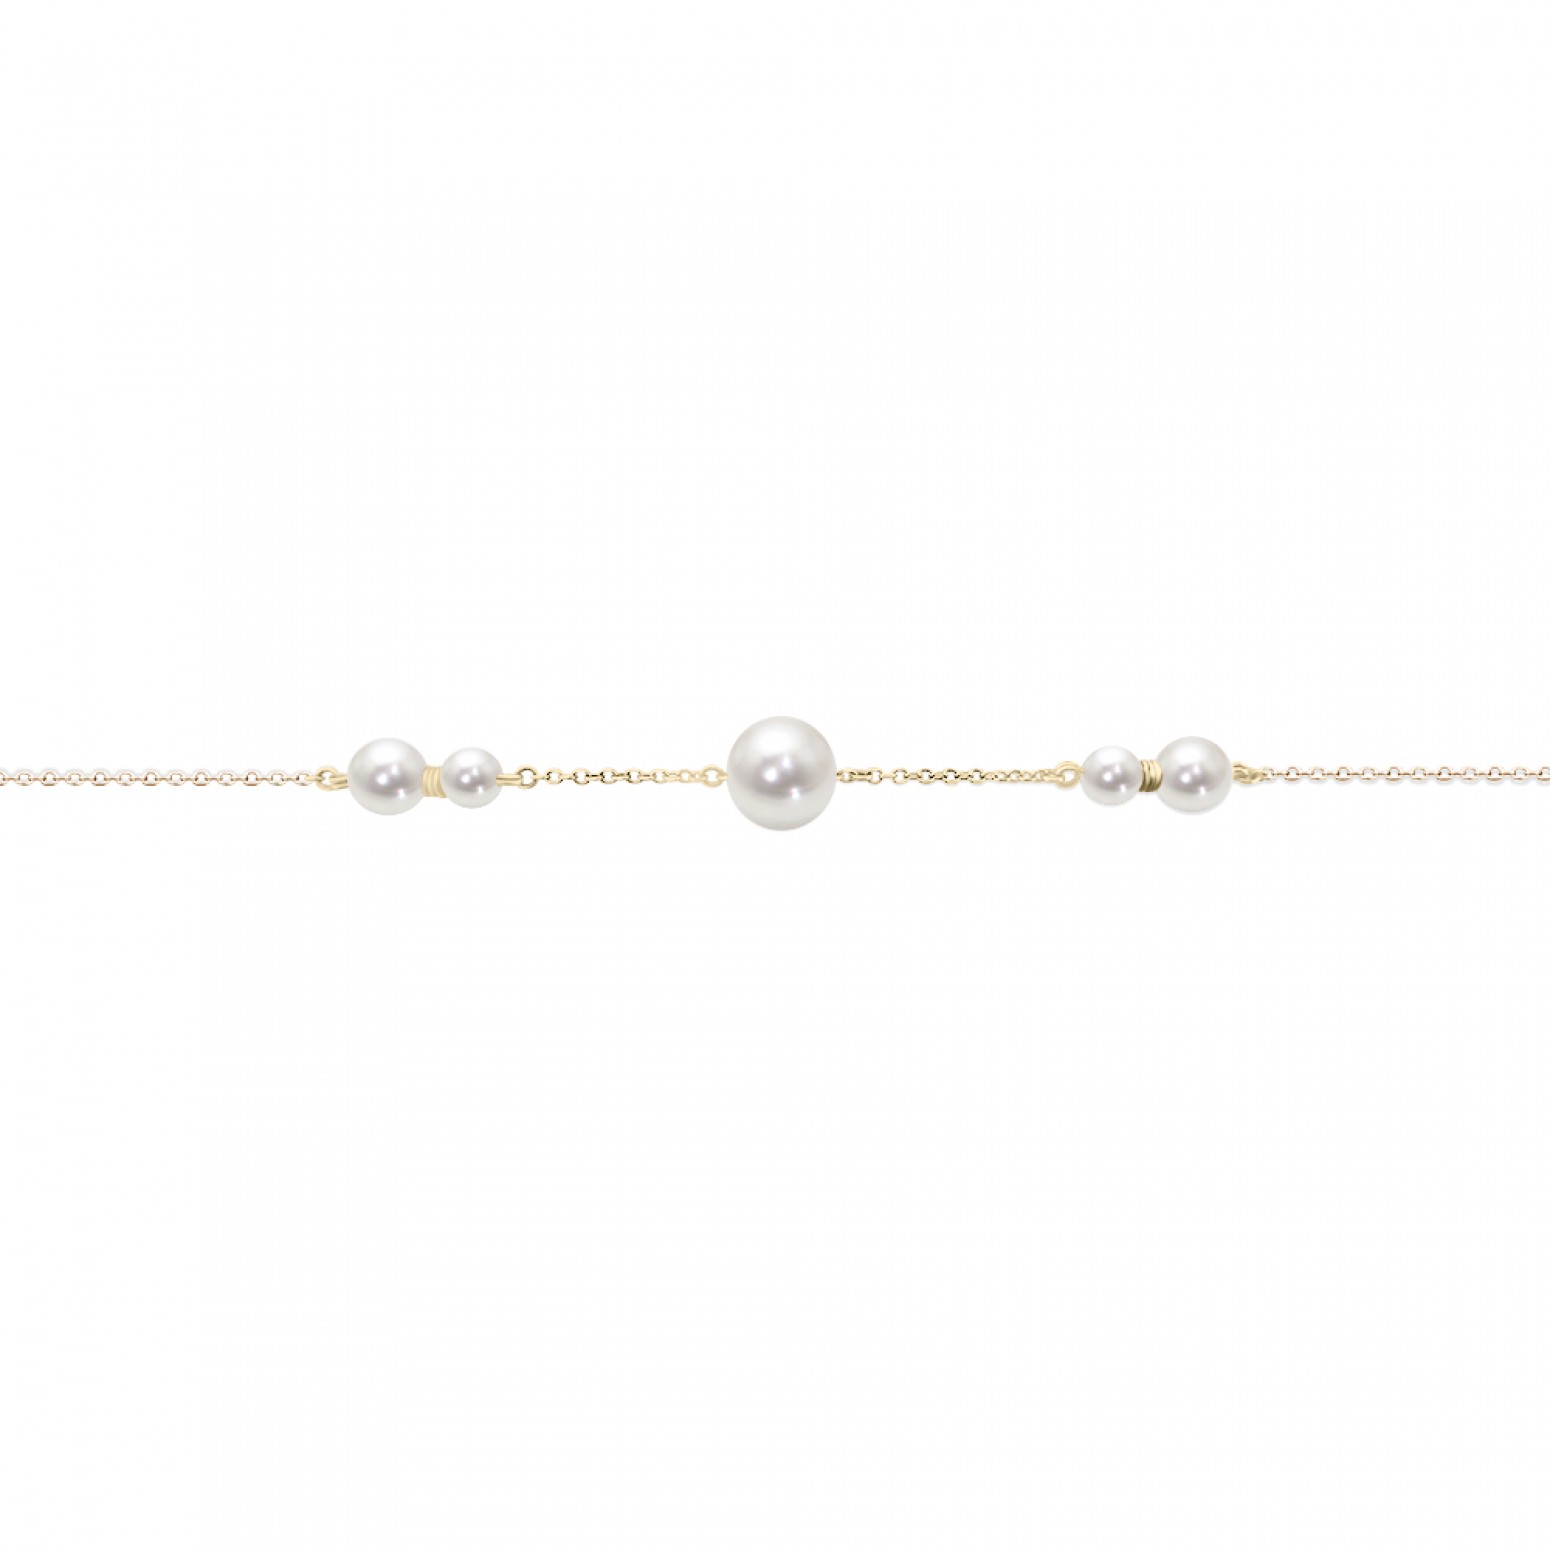 Bracelet Κ14 gold with pearls, H br1963 BRACELETS Κοσμηματα - chrilia.gr